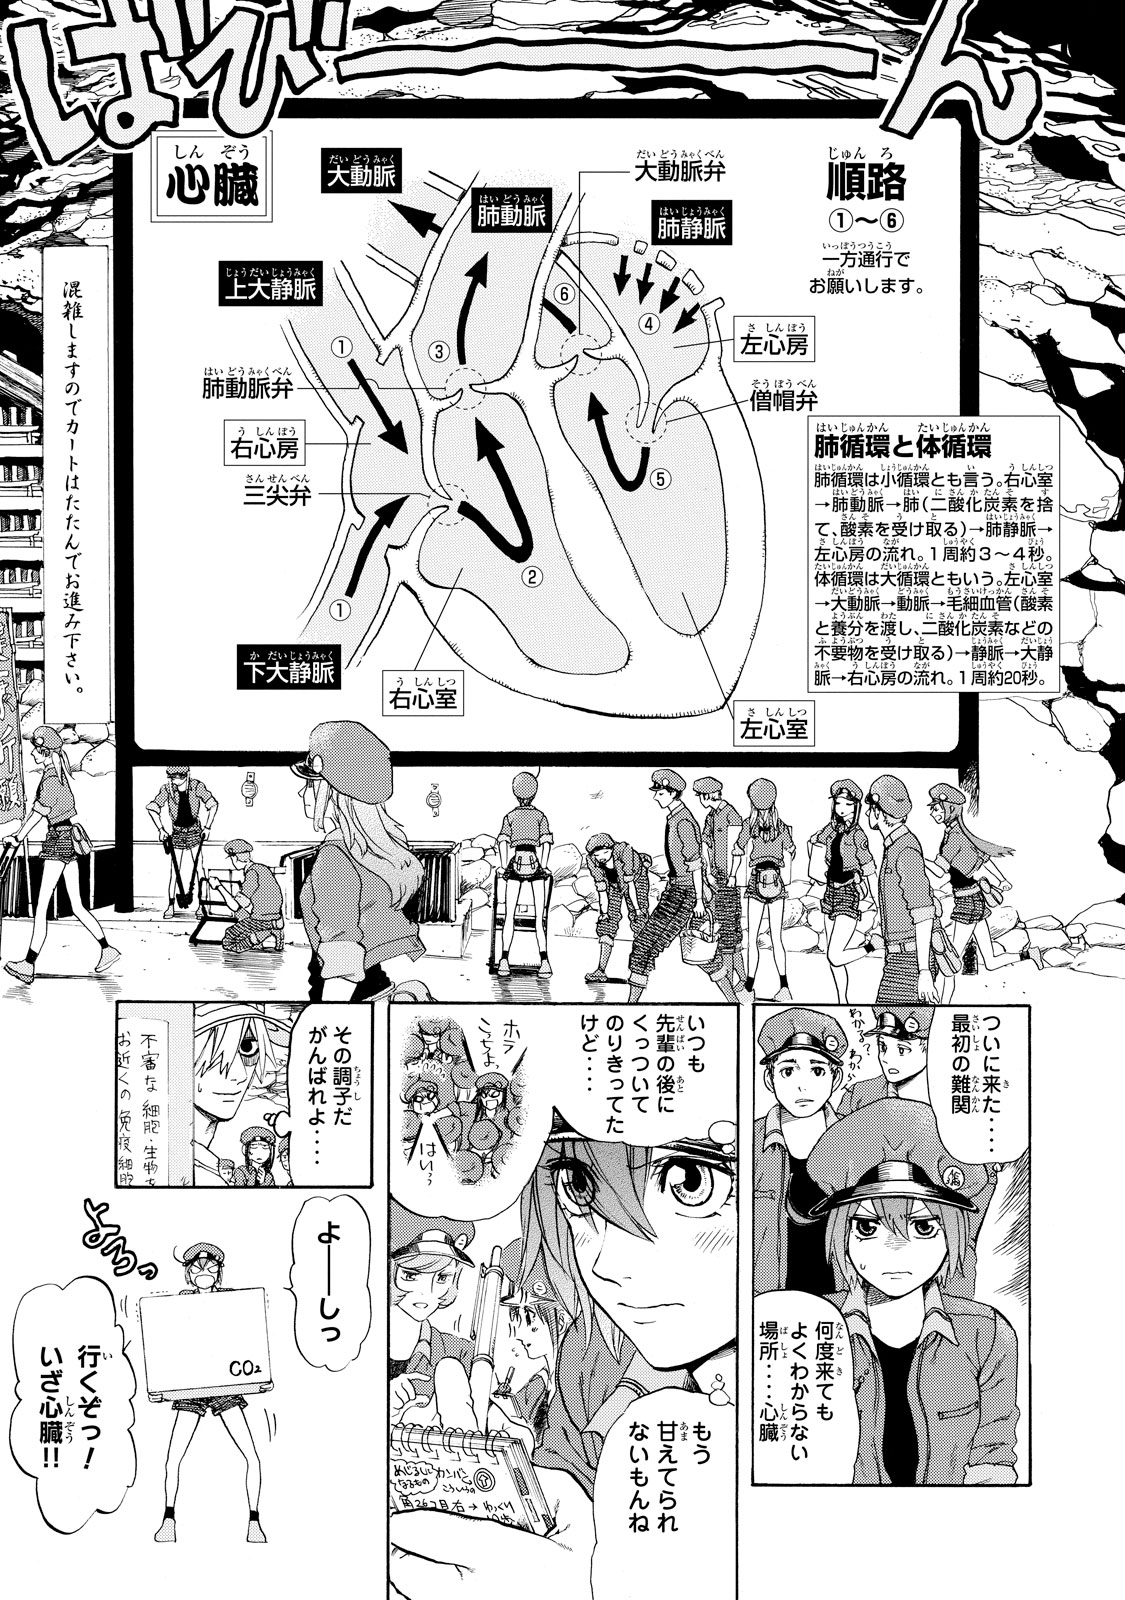 Hataraku Saibou - Chapter 10 - Page 13